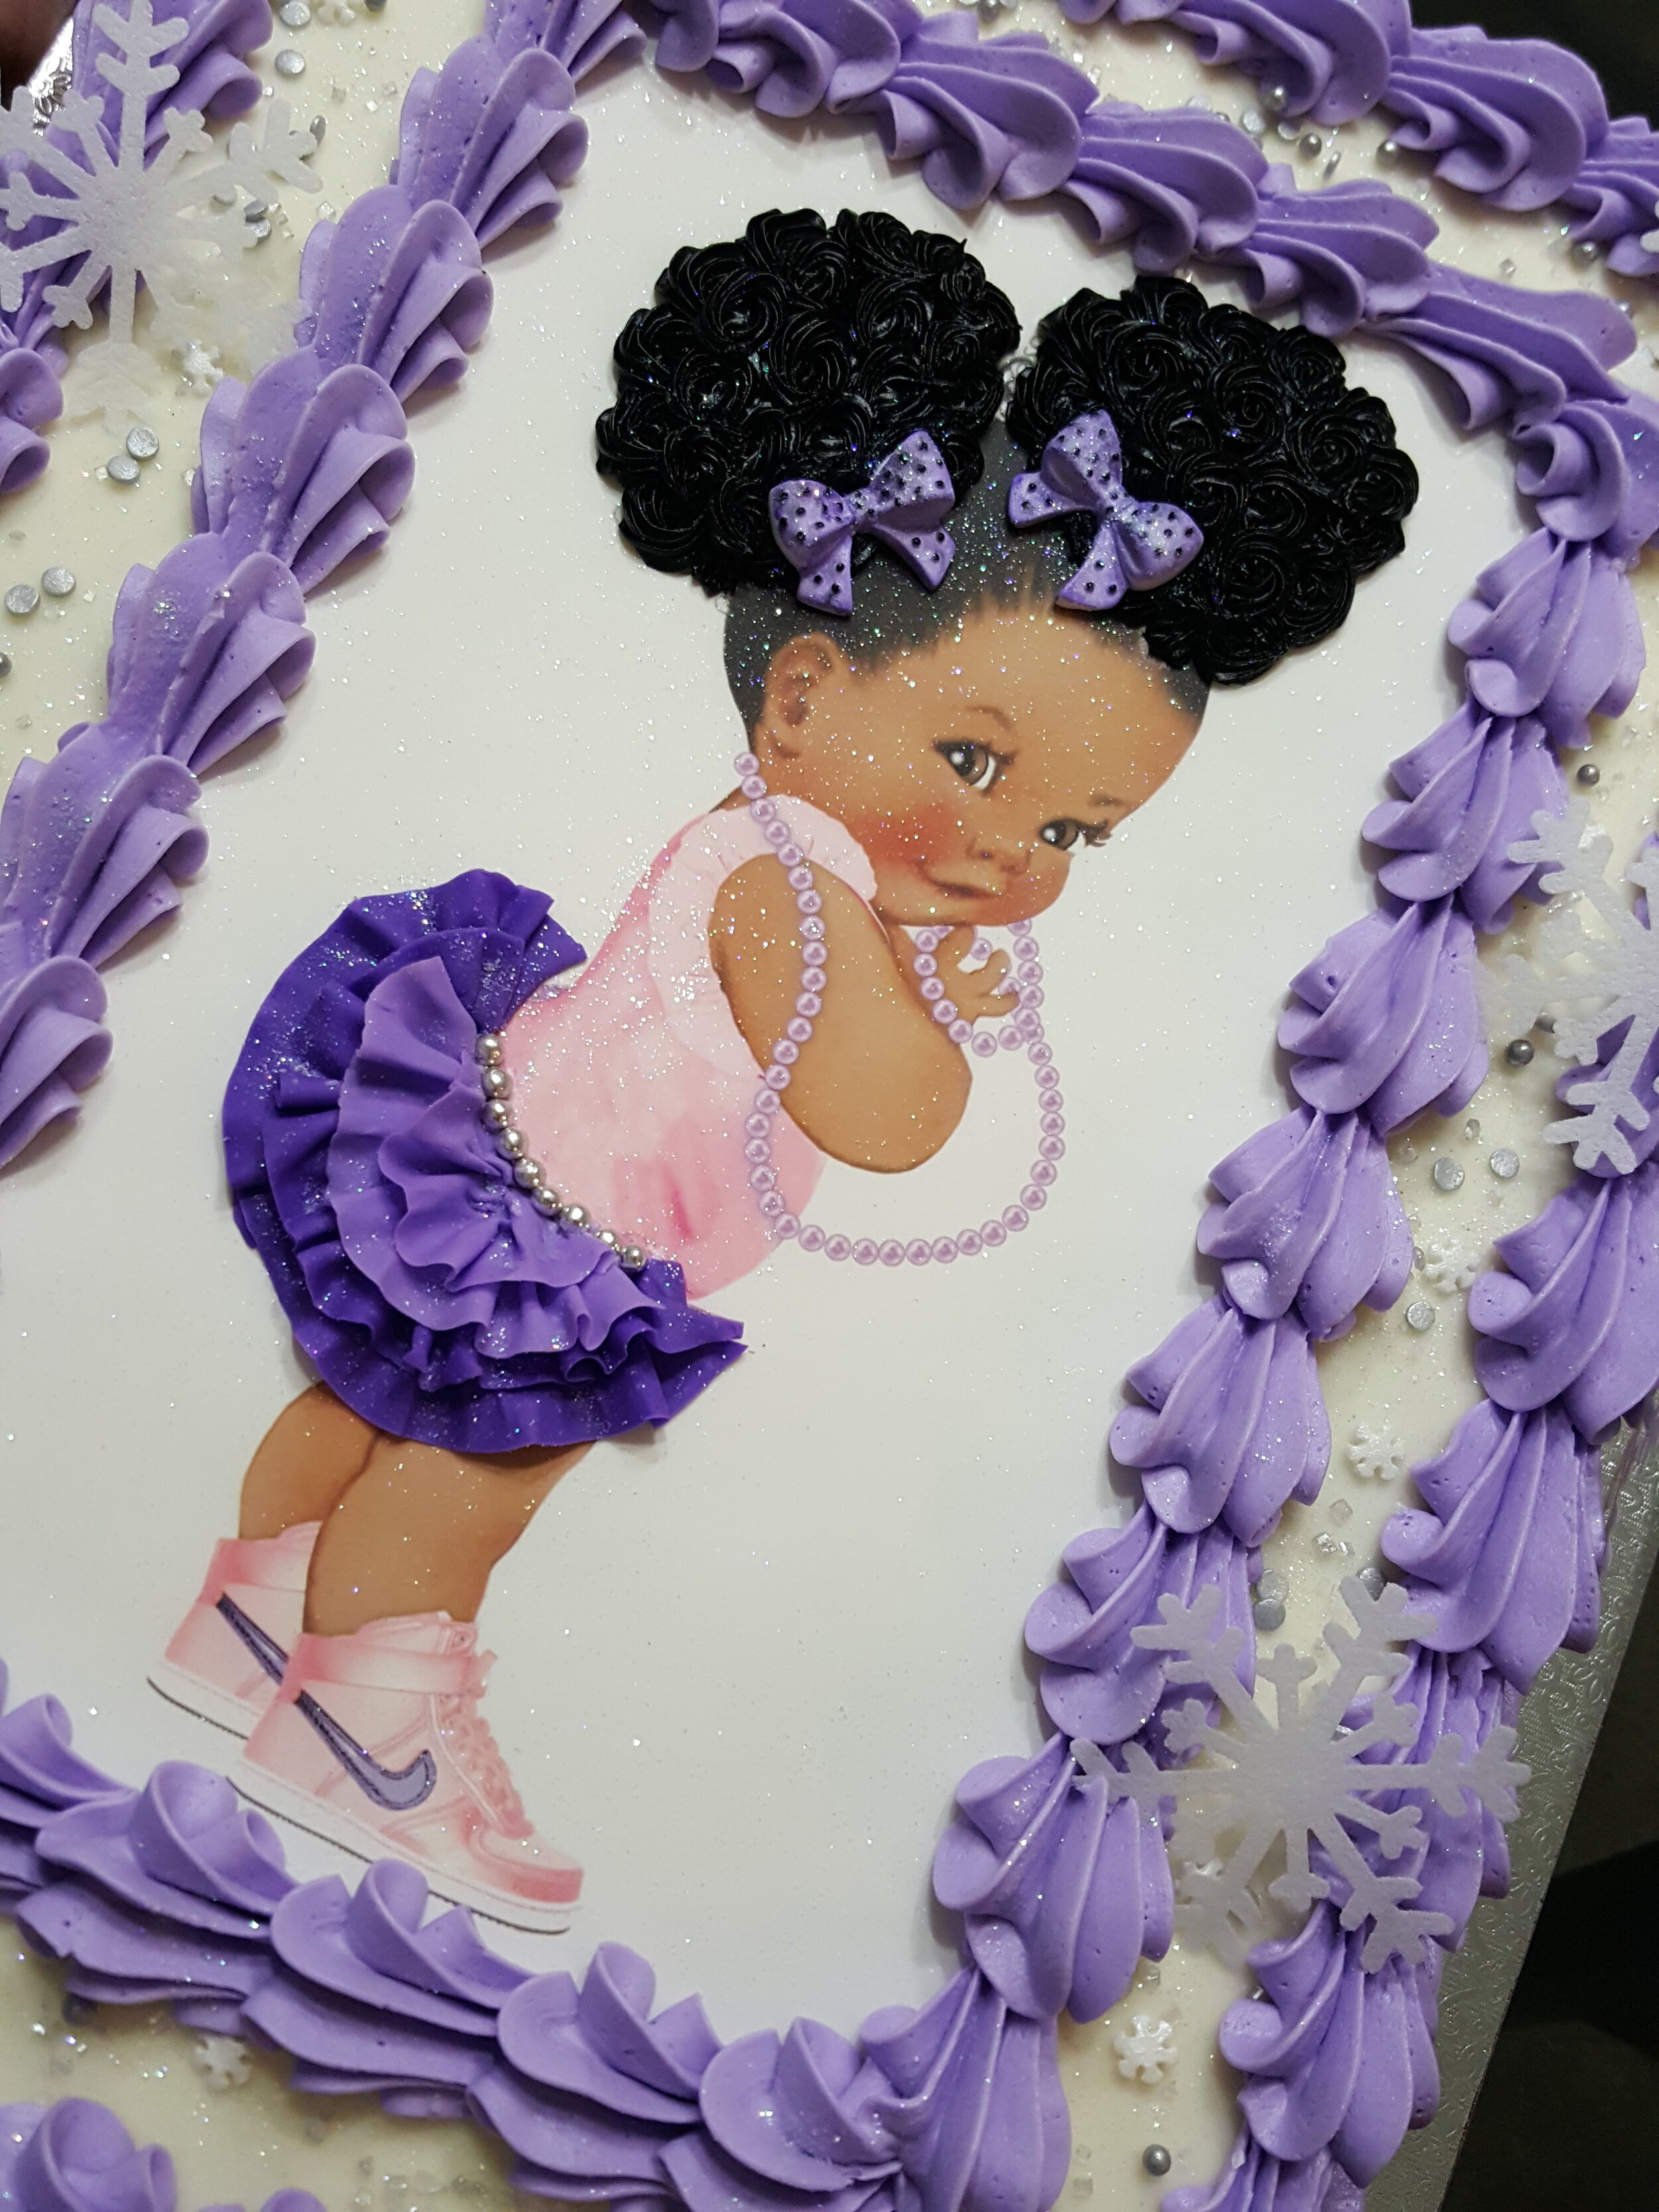 Chicago_Bakery-Baby_shower-Cake-purple.jpg